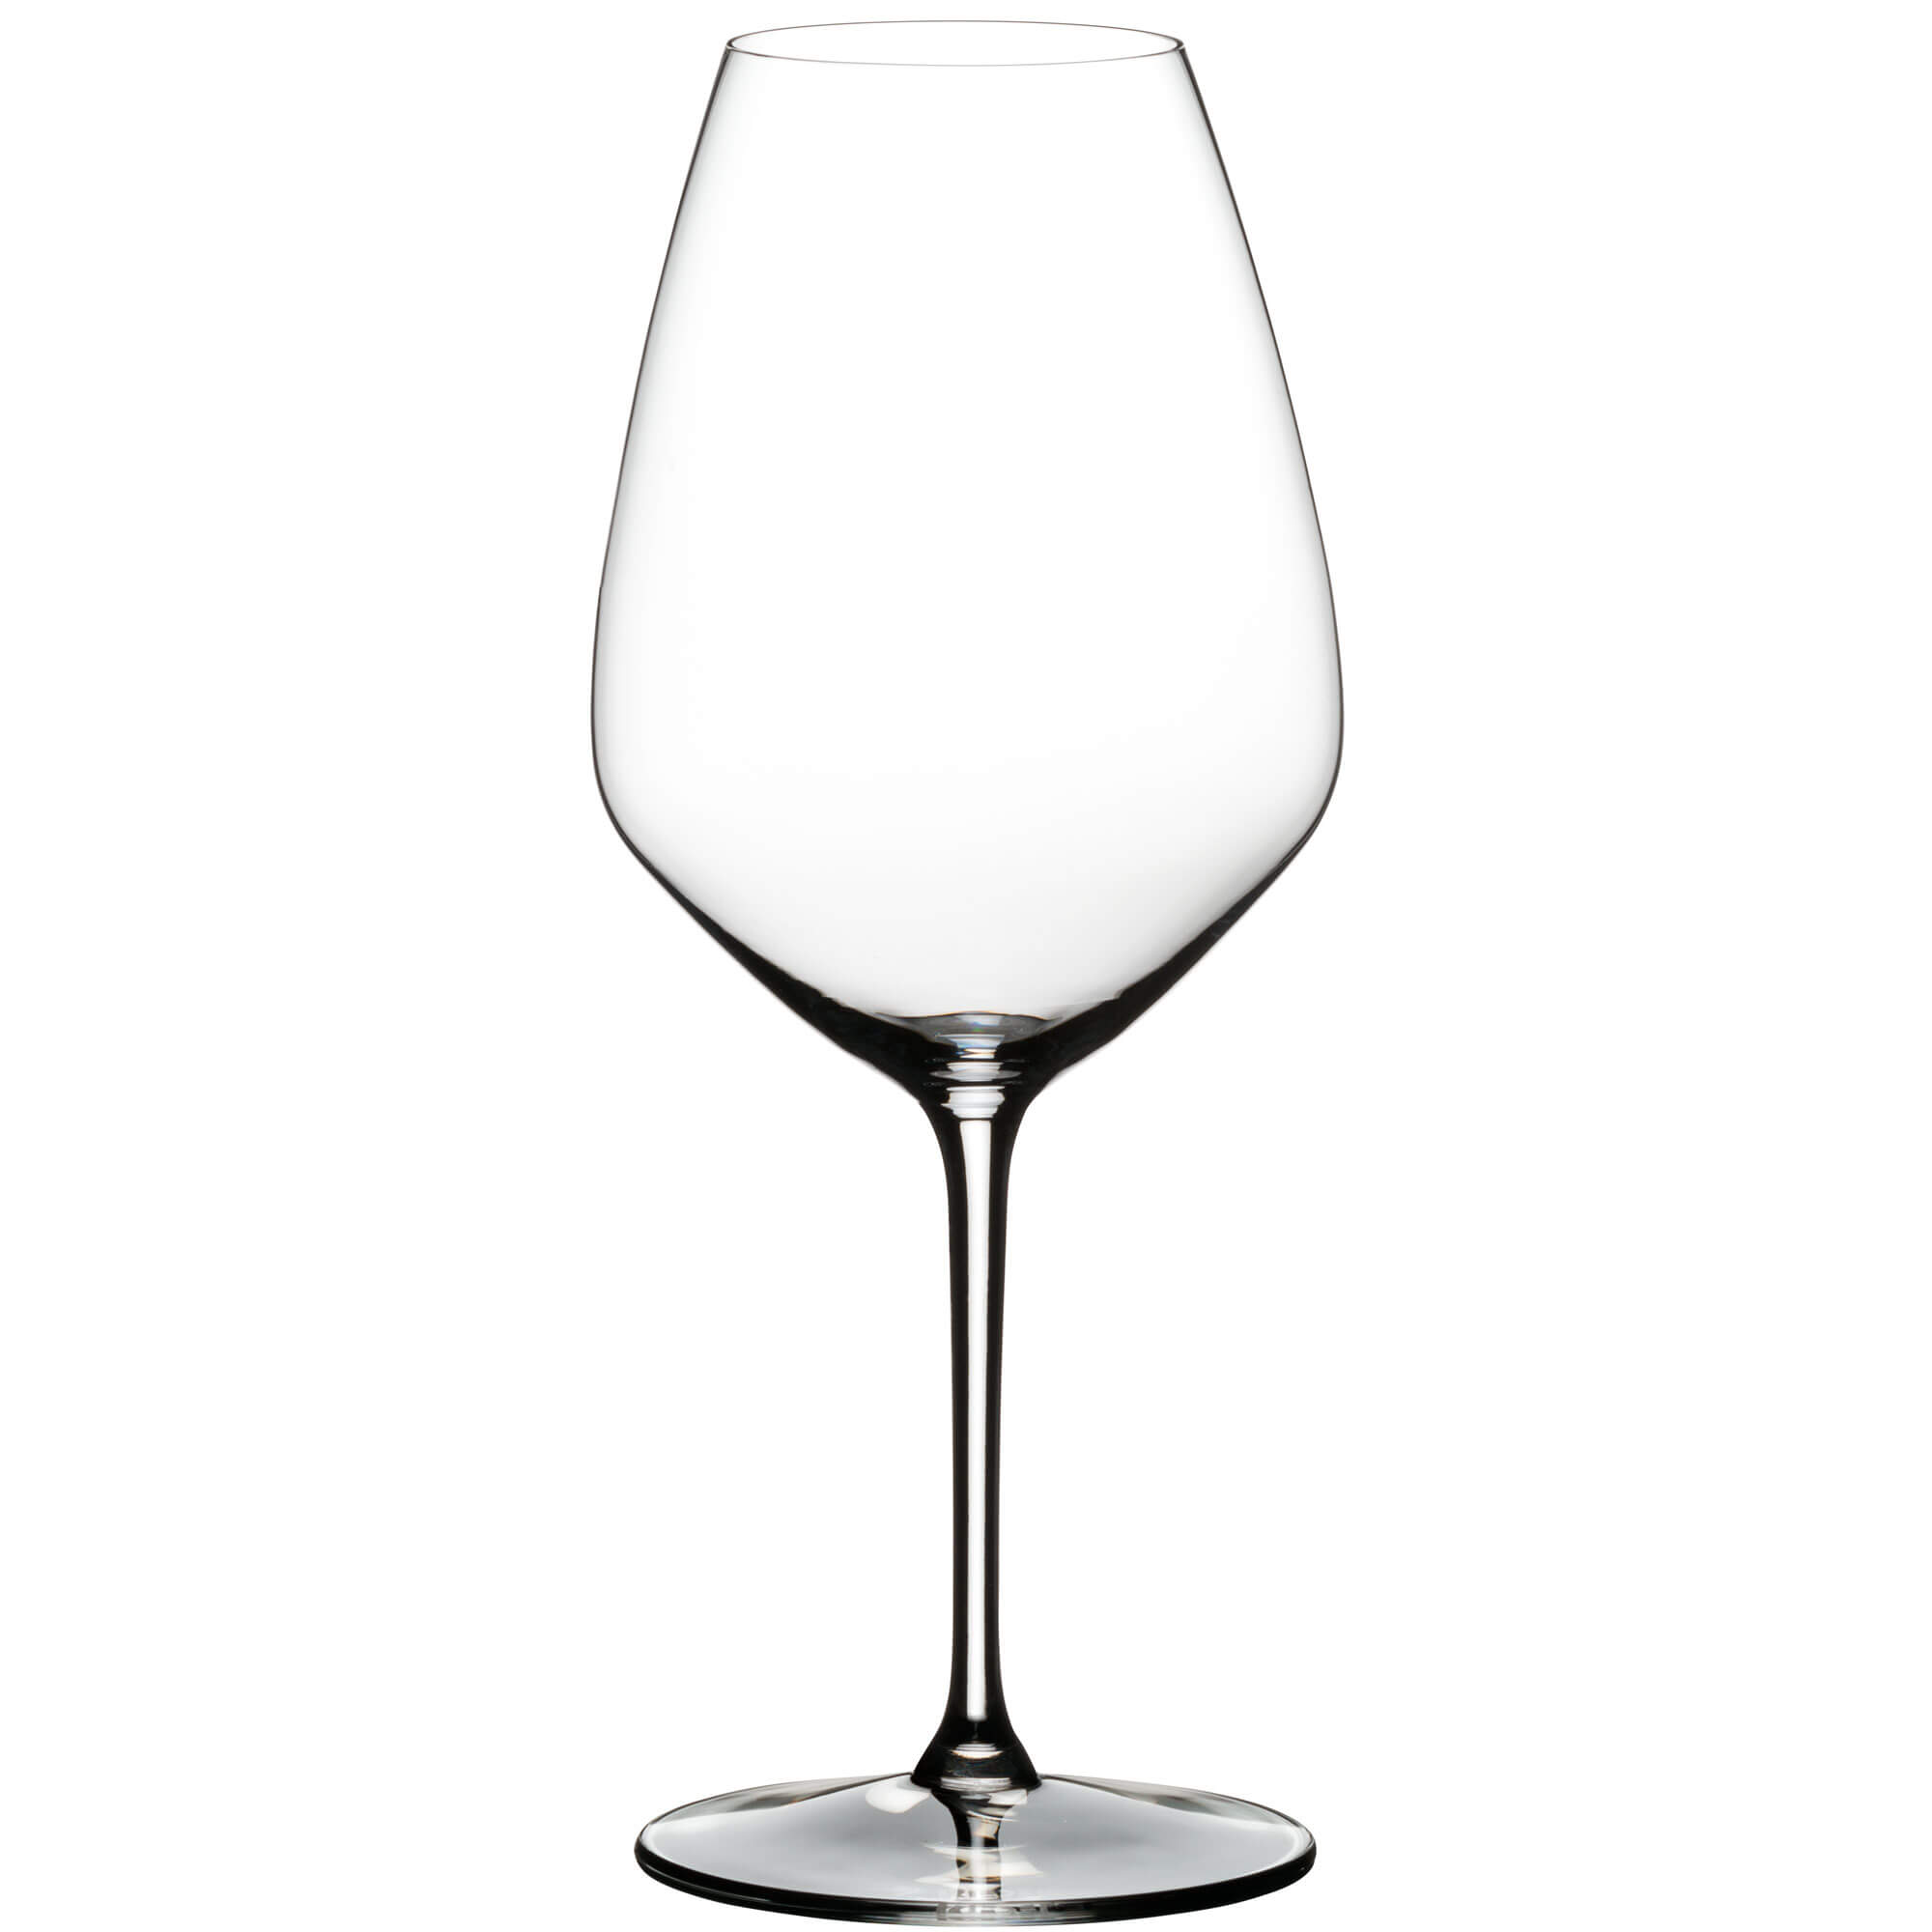 Shiraz glass Extreme, Riedel - 709ml (2 pcs.)